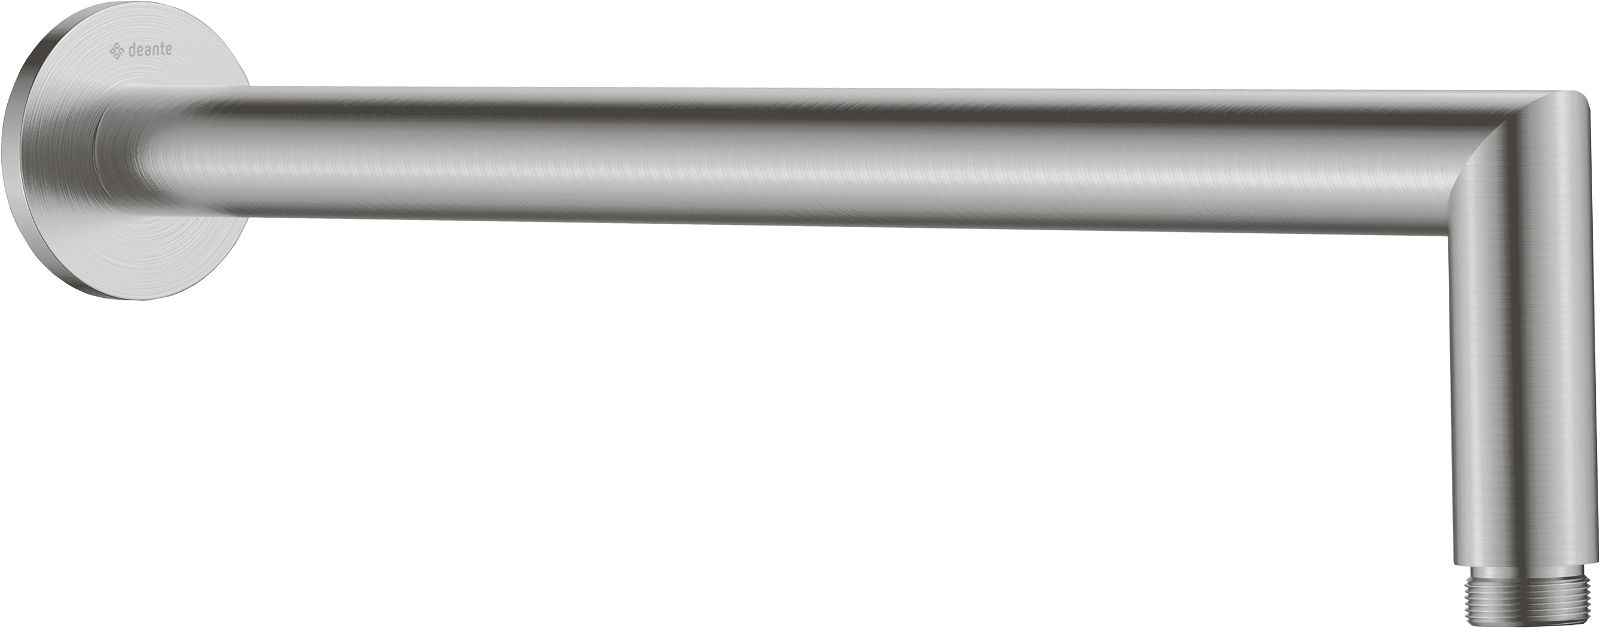 Pipă de umpelre cadă, montare pe perete - 400 mm - NAC_F45K - Główne zdjęcie produktowe